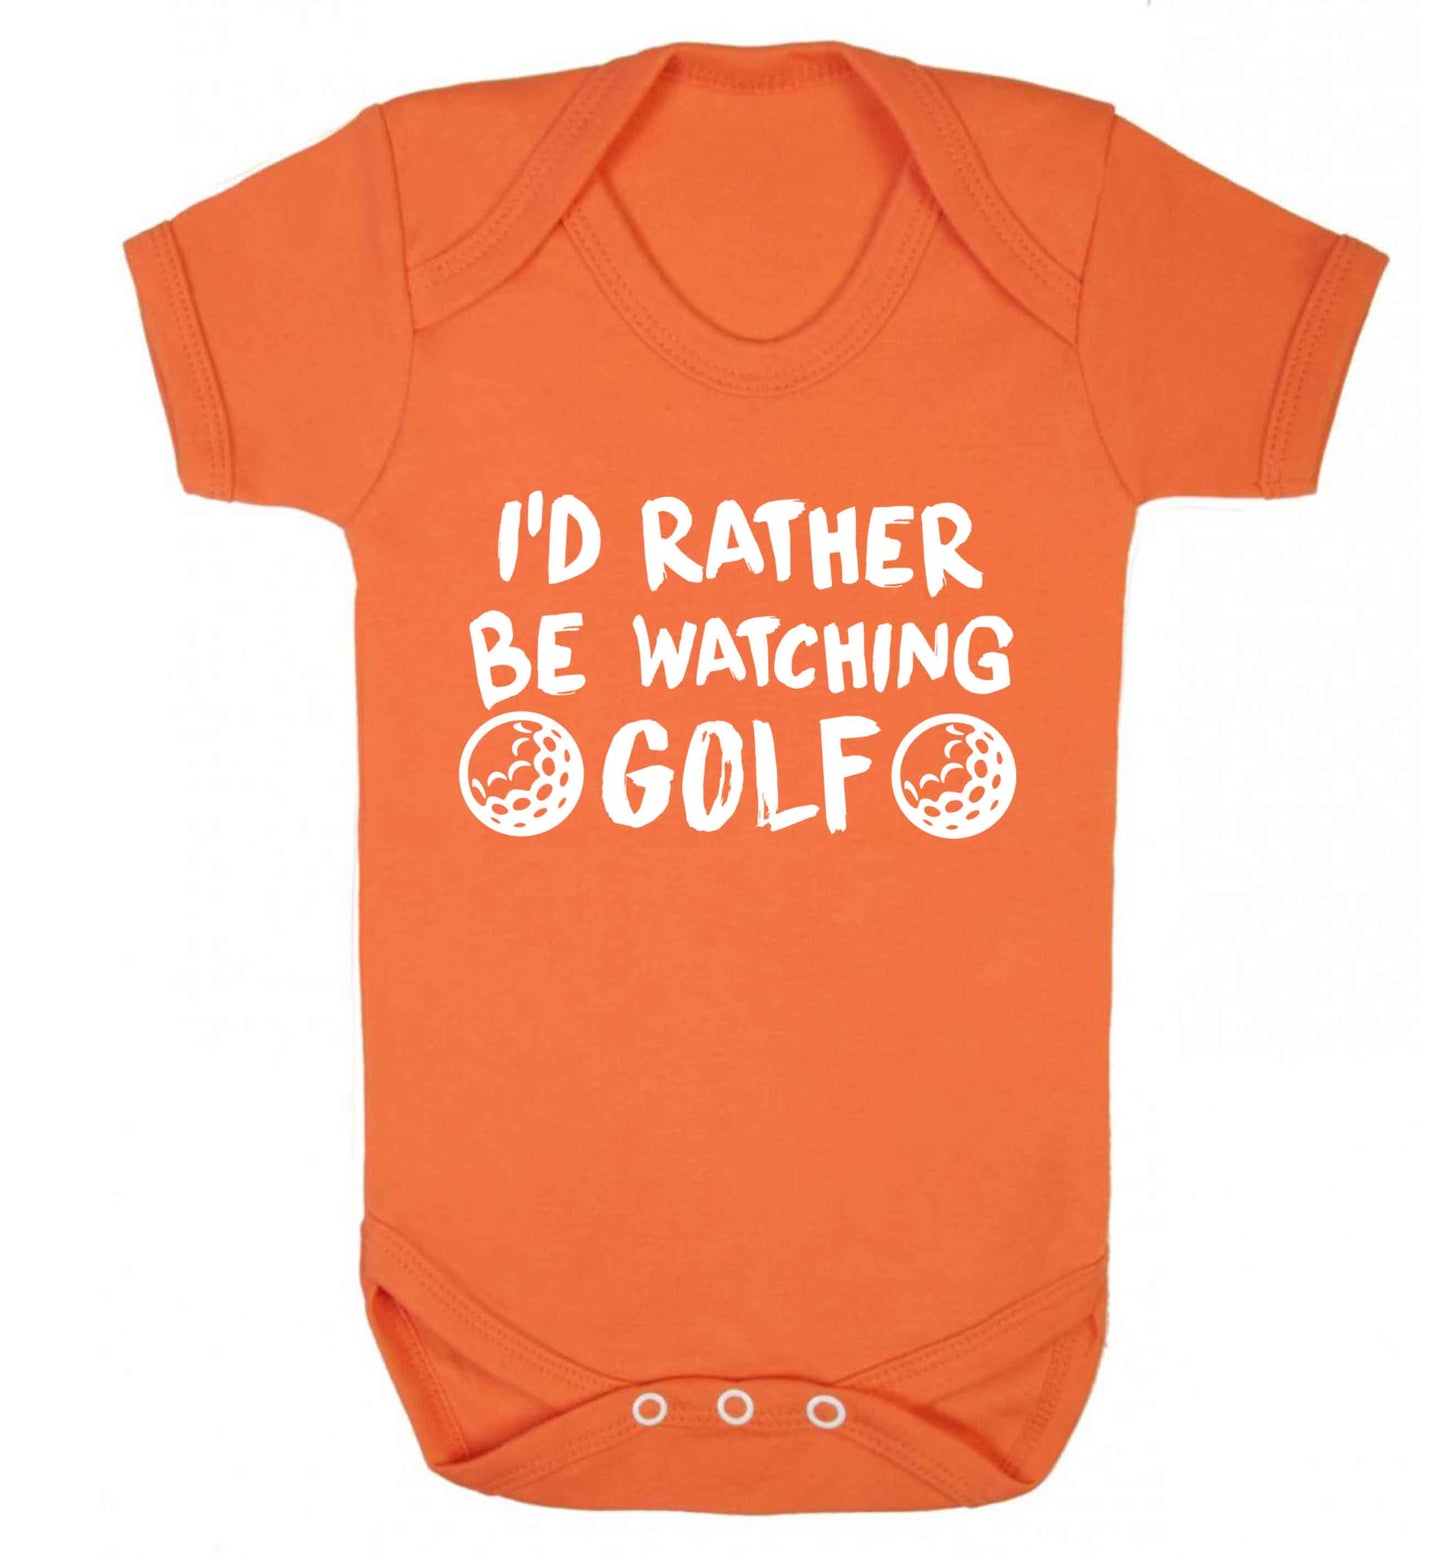 I'd rather be watching golf Baby Vest orange 18-24 months